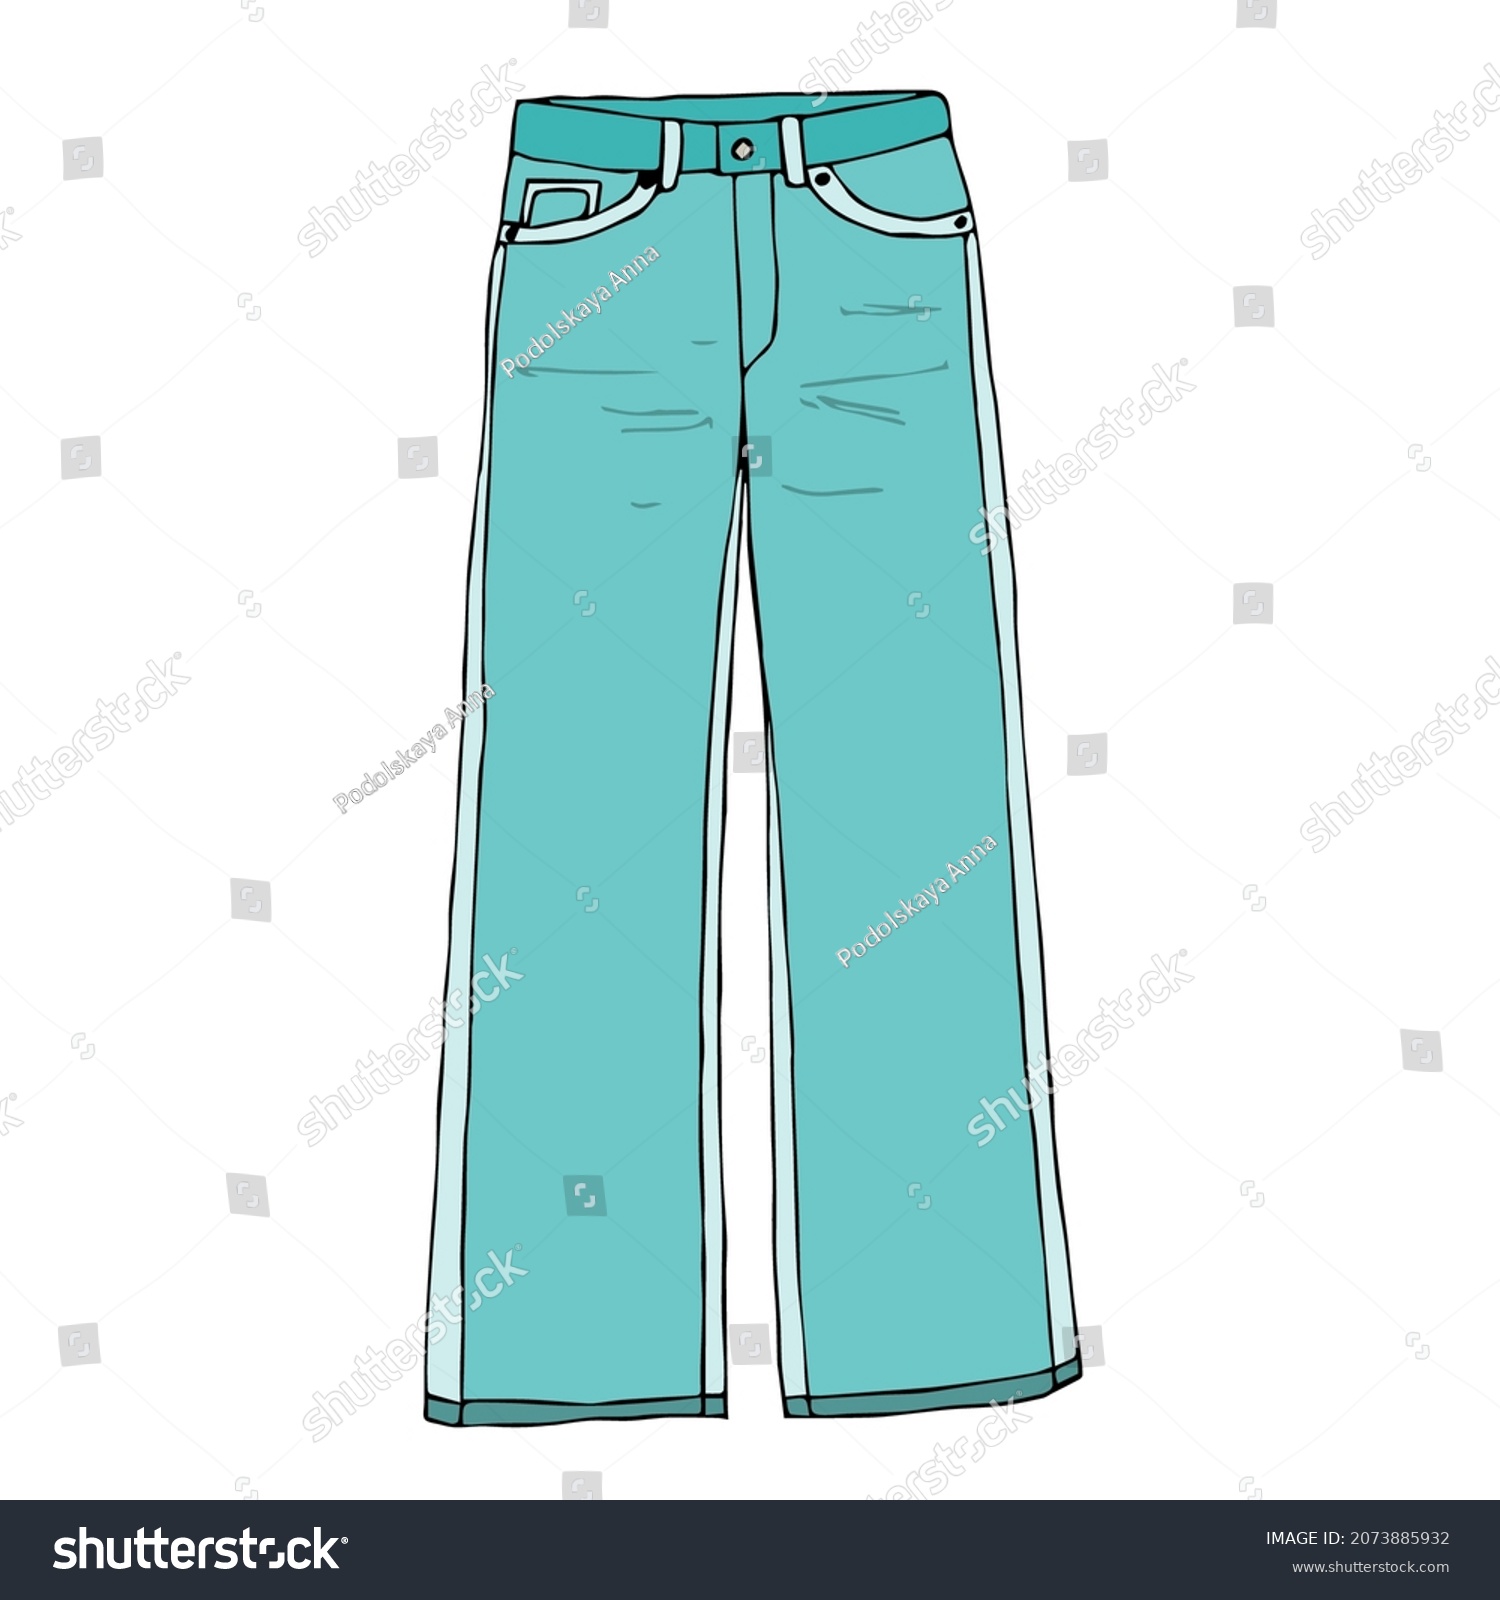 785 Low rise jeans Images, Stock Photos & Vectors | Shutterstock